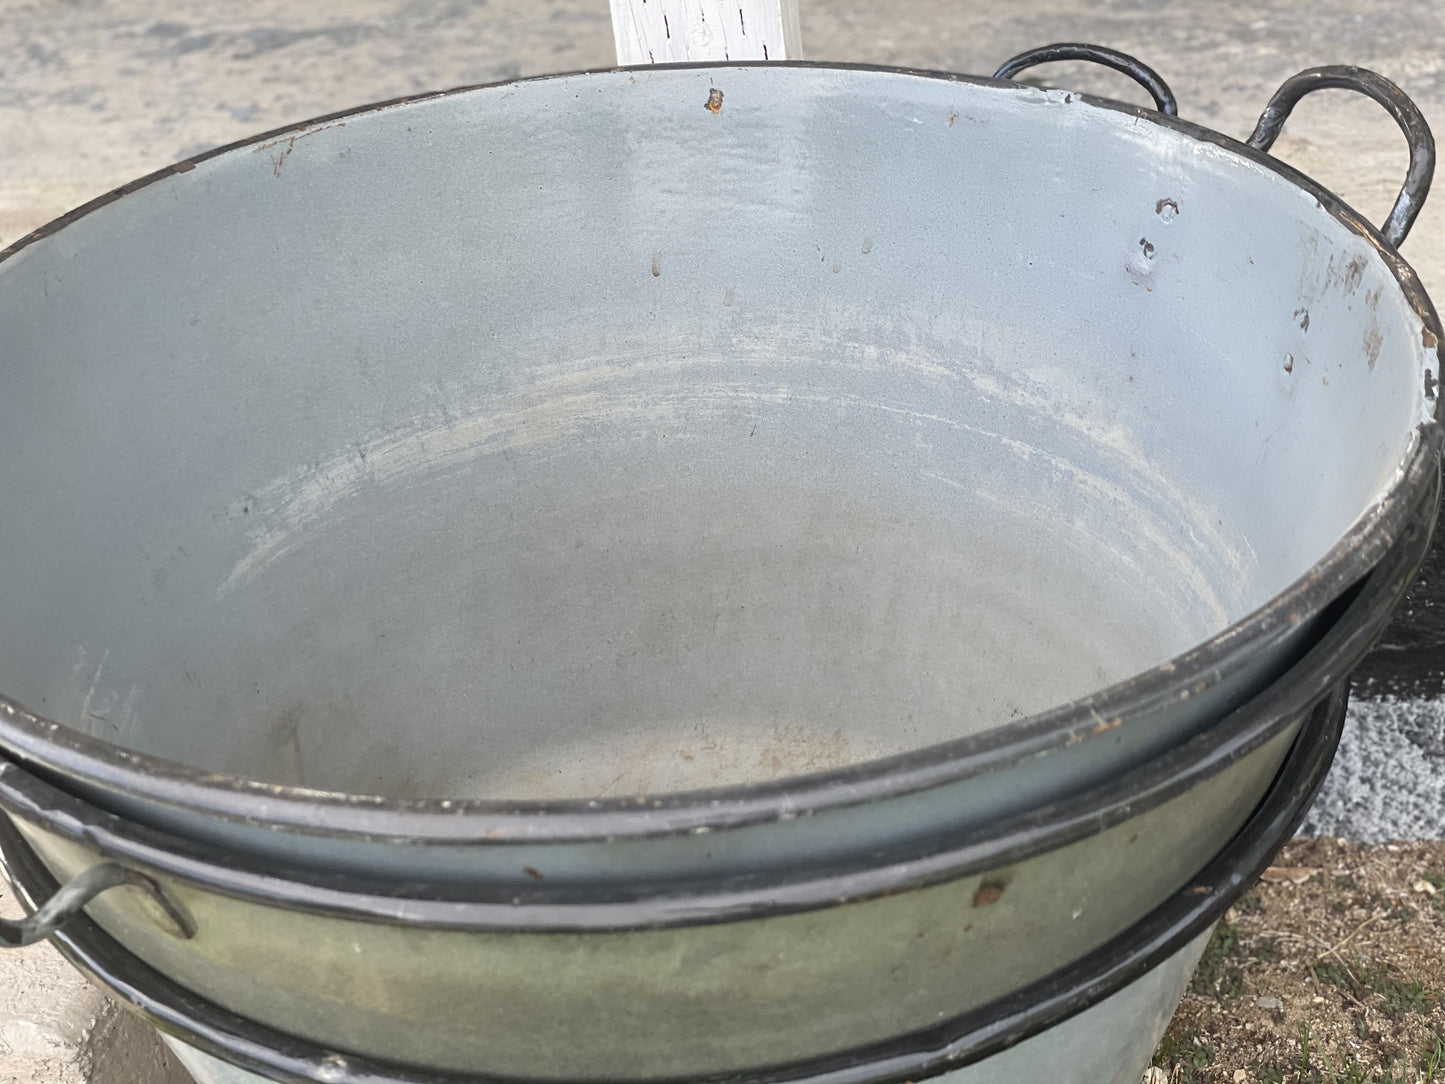 Giant European Enamel Bucket with handles